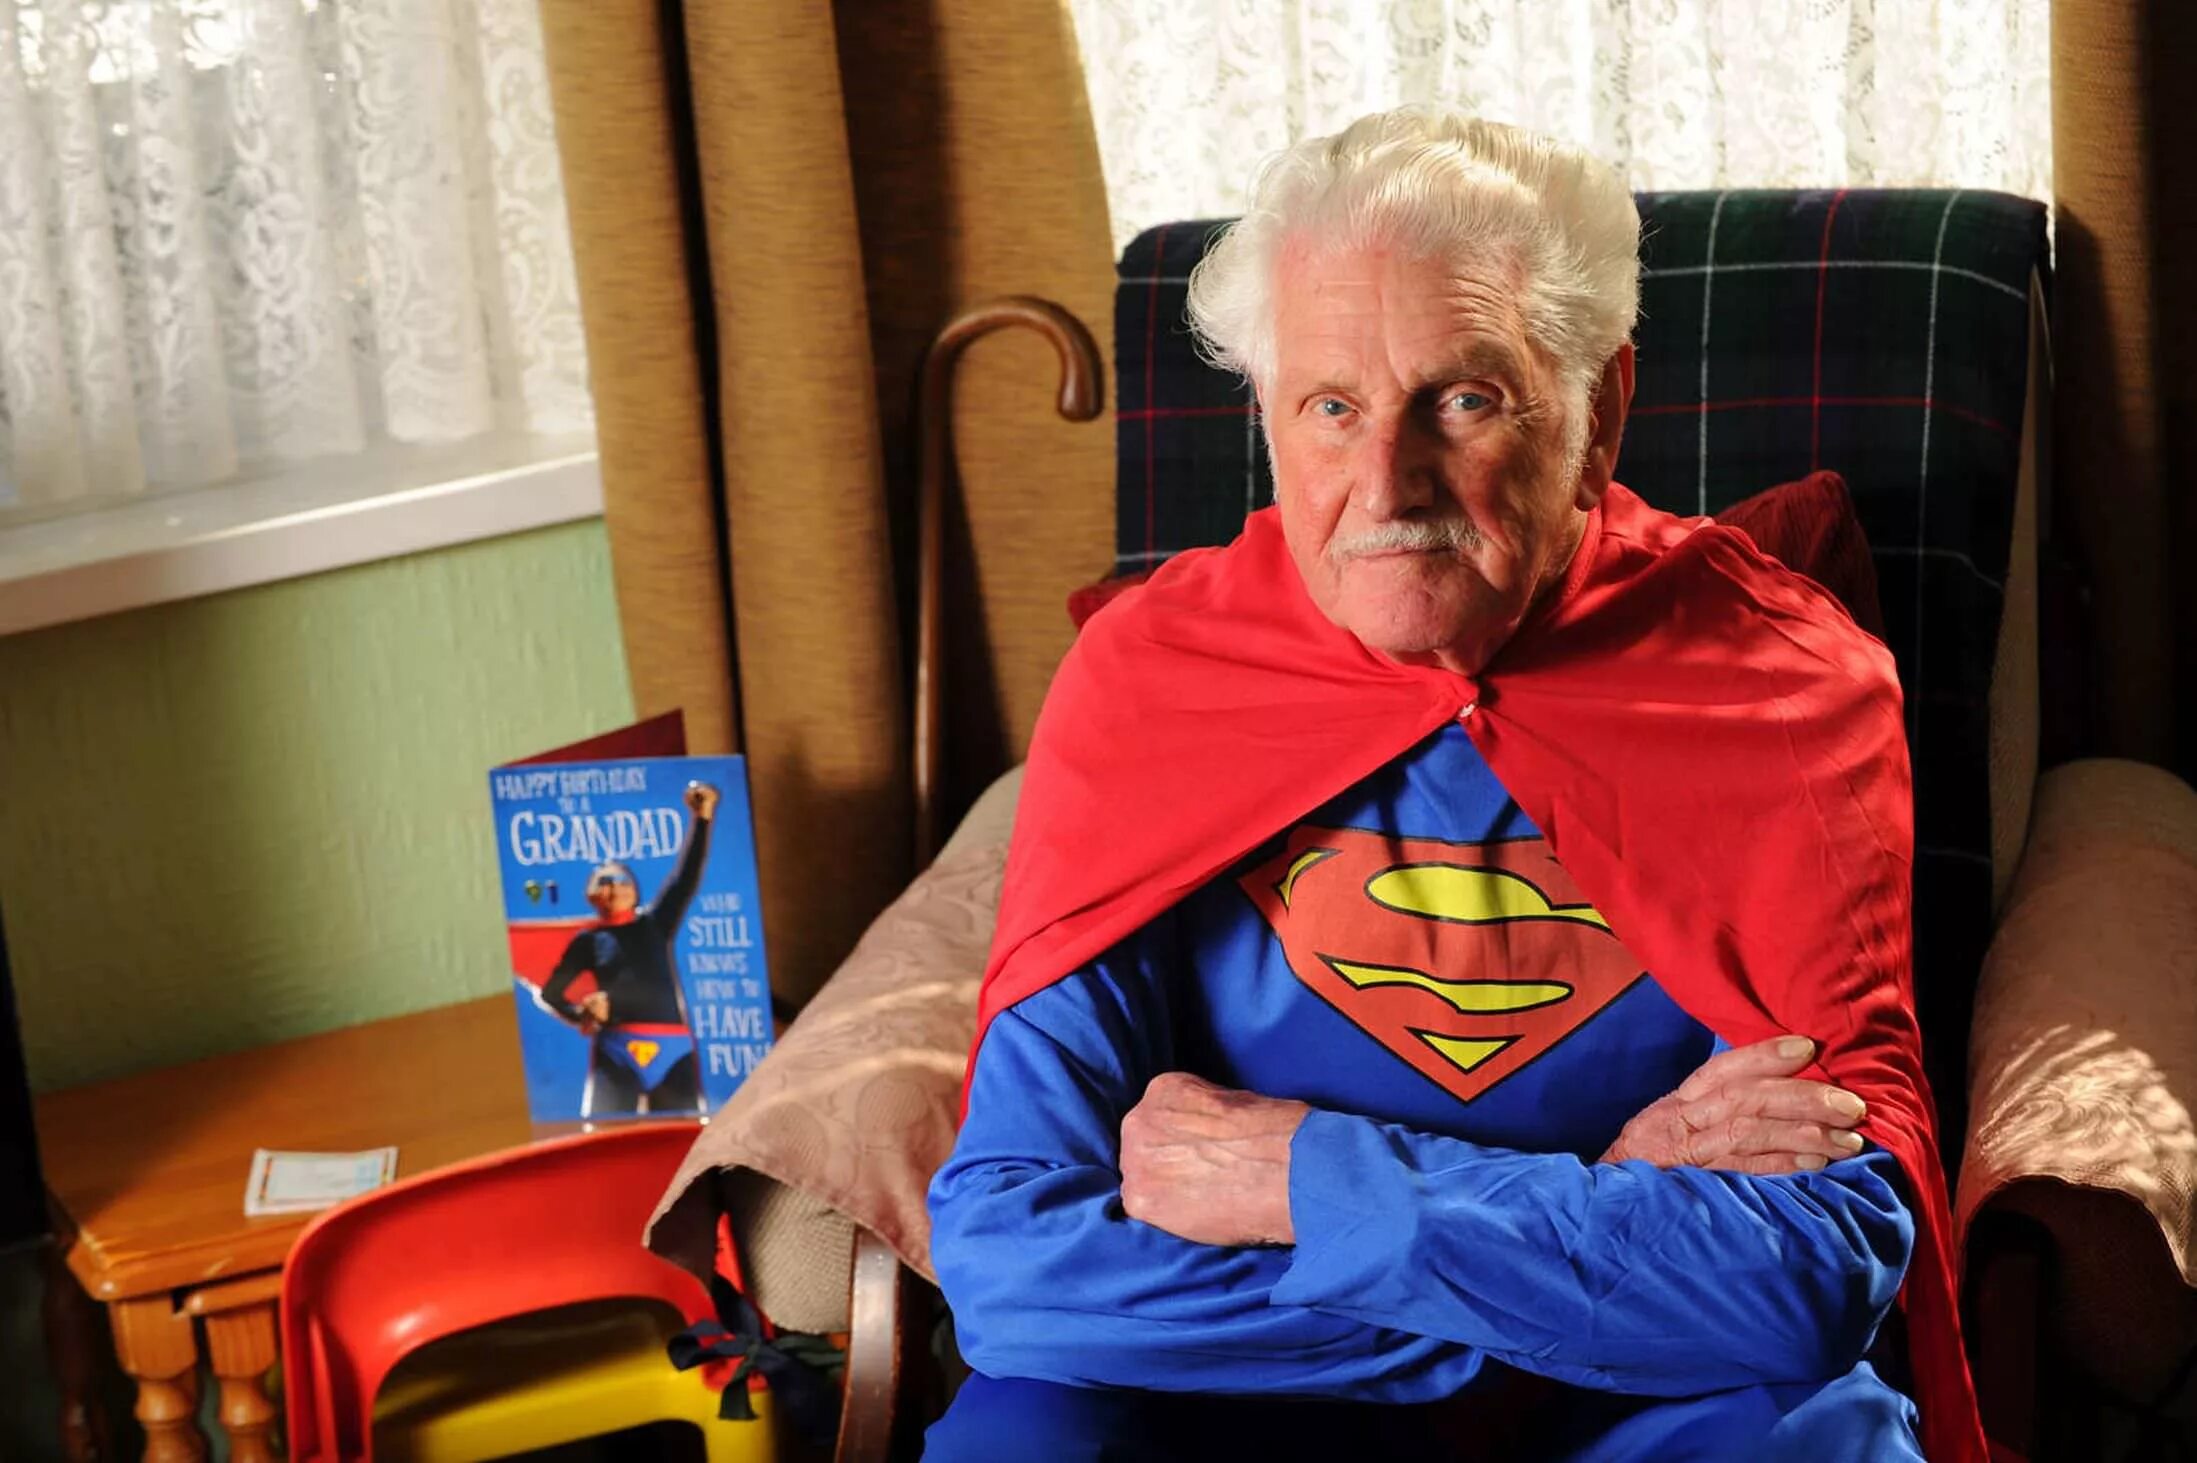 Супер дедушка. Старик Супермен. Дед в костюме Супермена. Супермен пожилой. Где дедуля